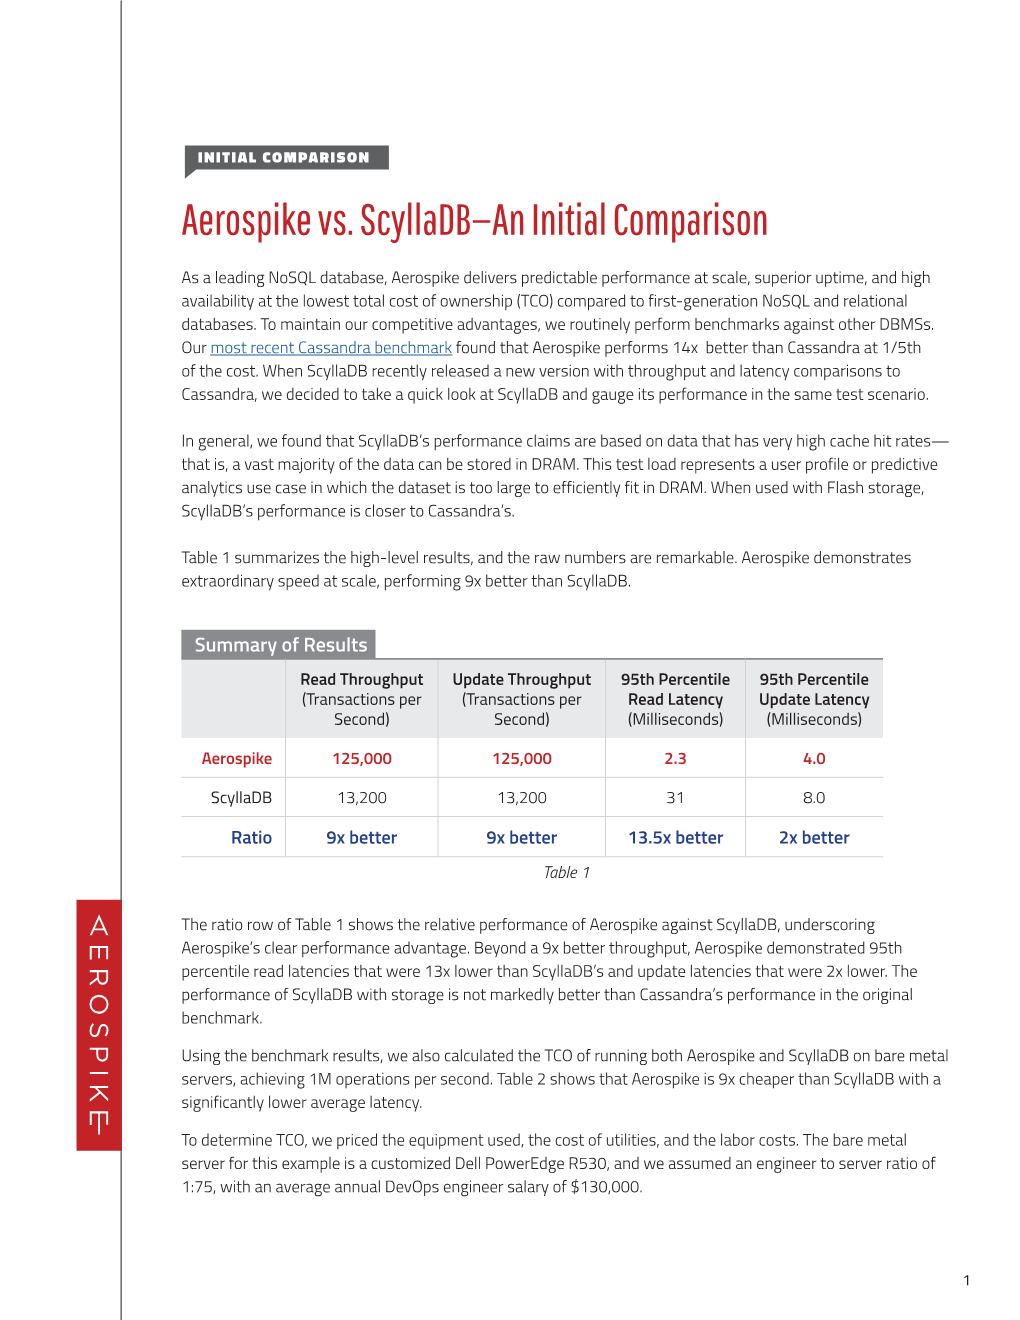 Aerospike Vs. Scylladb—An Initial Comparison